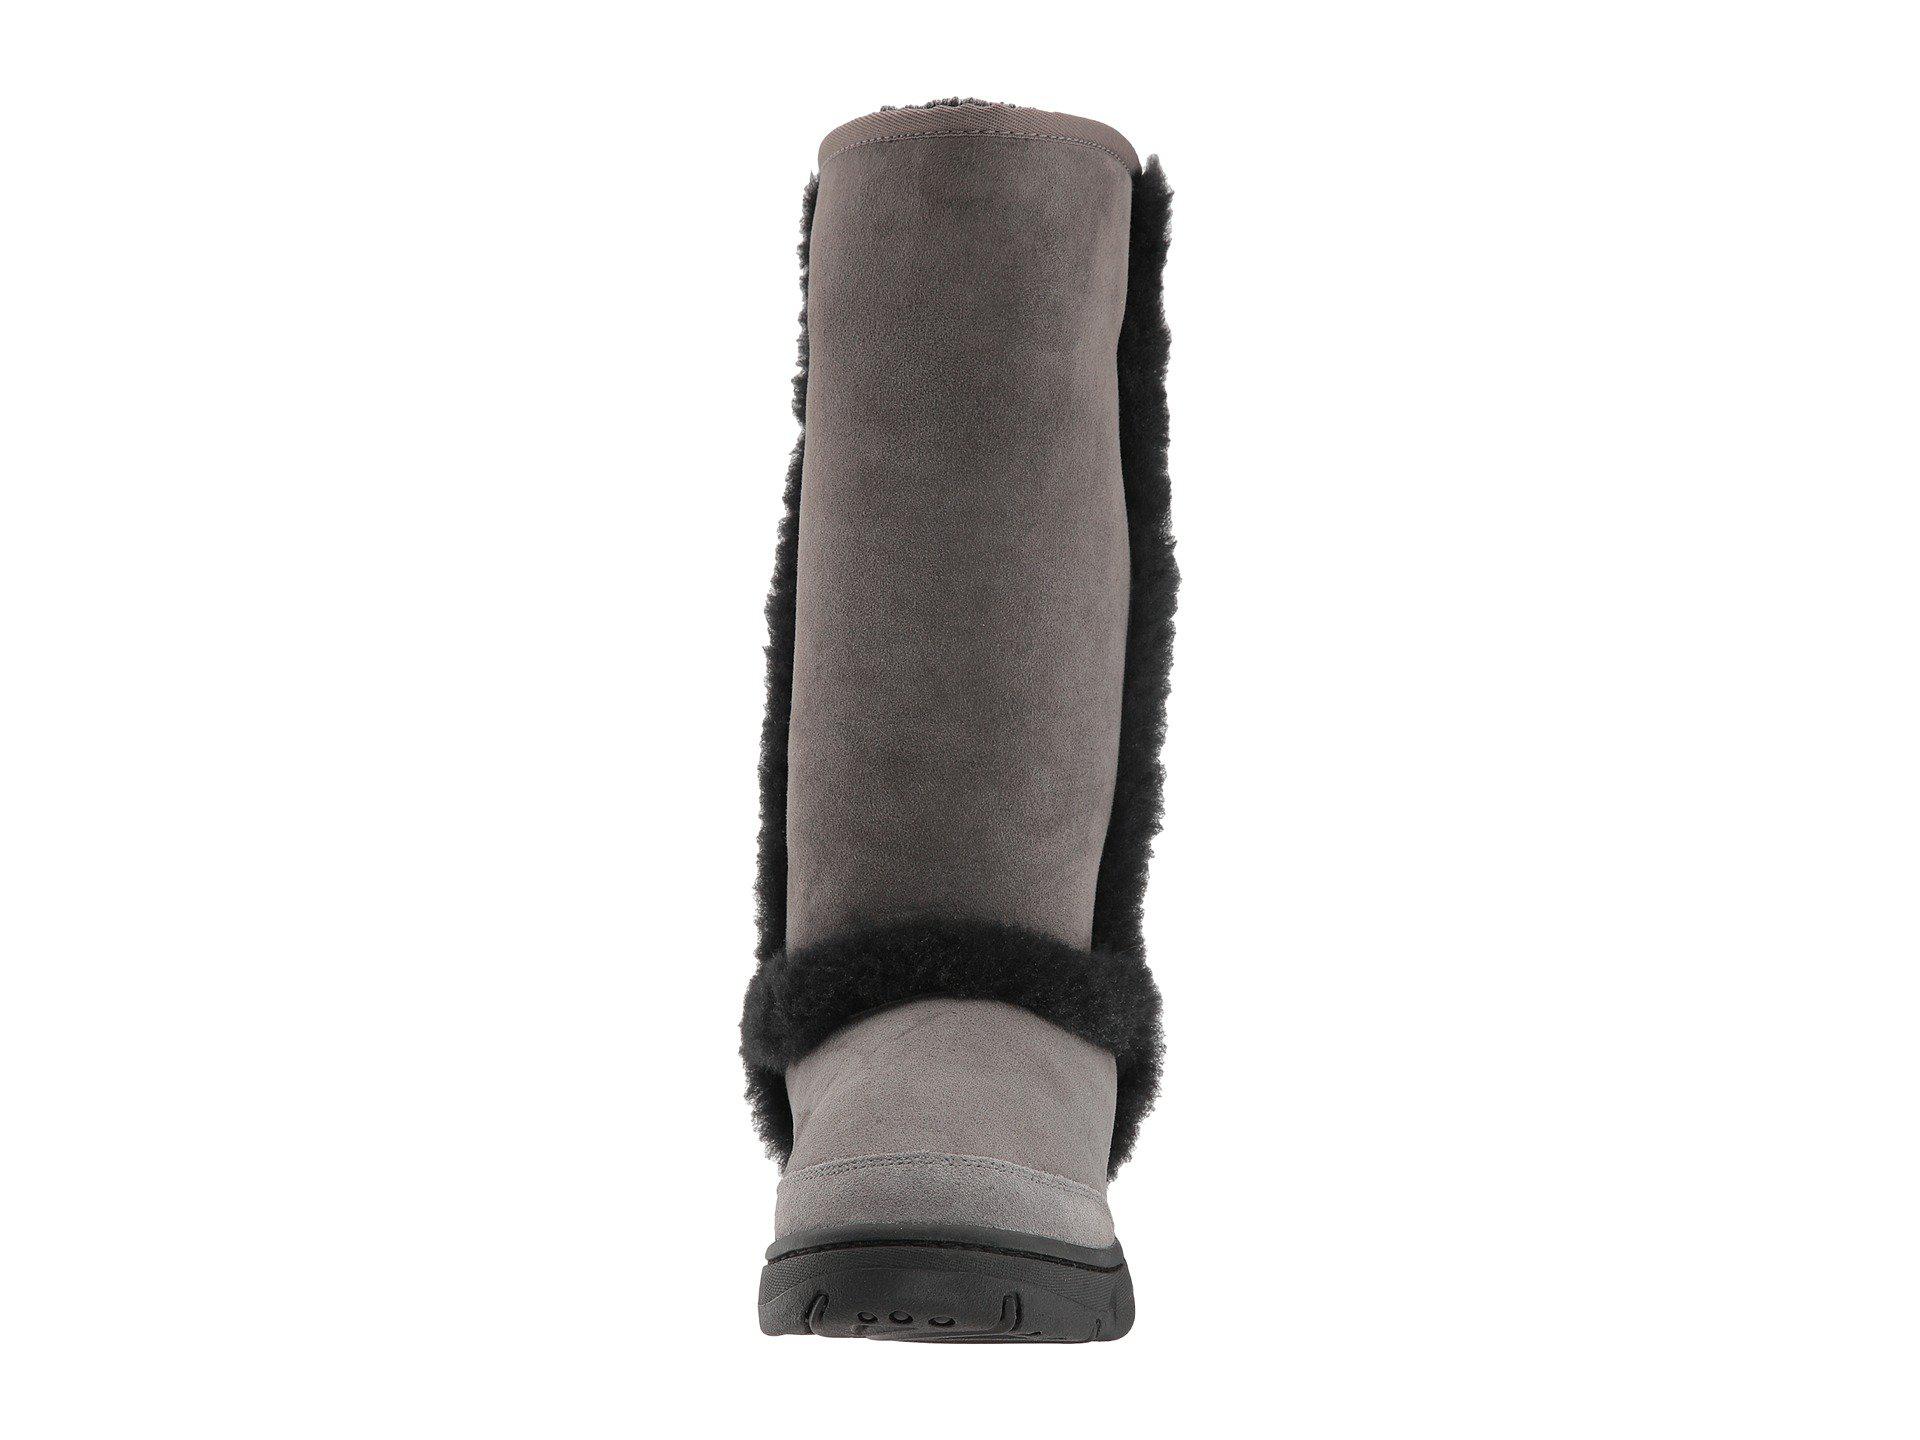 UGG Suede Sunburst Tall (grey/black) Women's Boots - Lyst